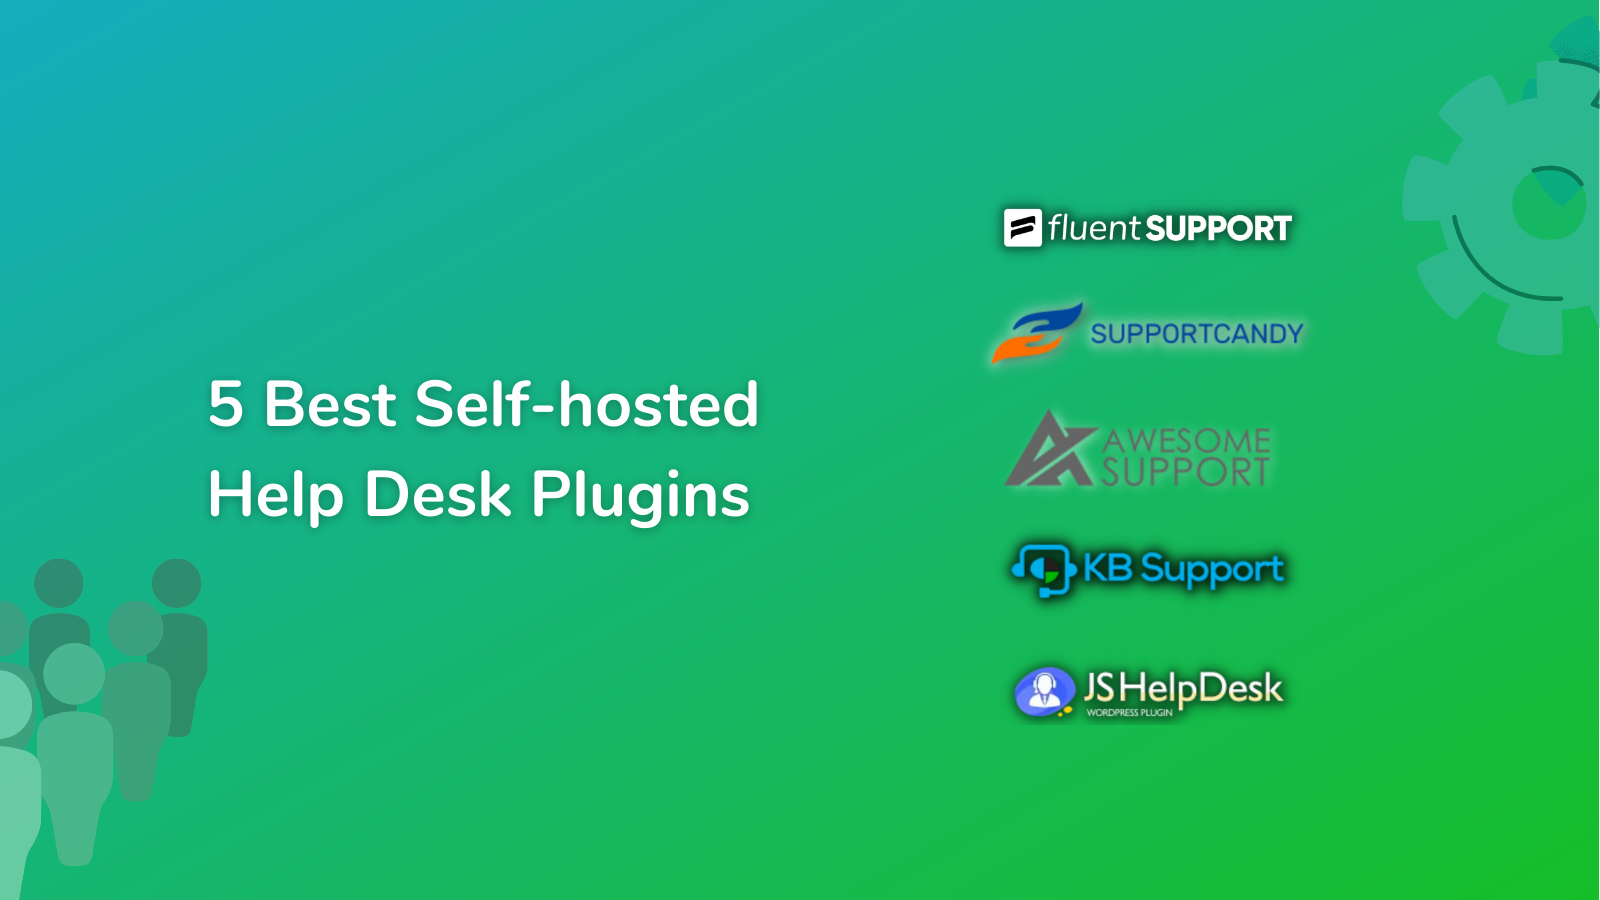 Sekf-hosted help desk plugins